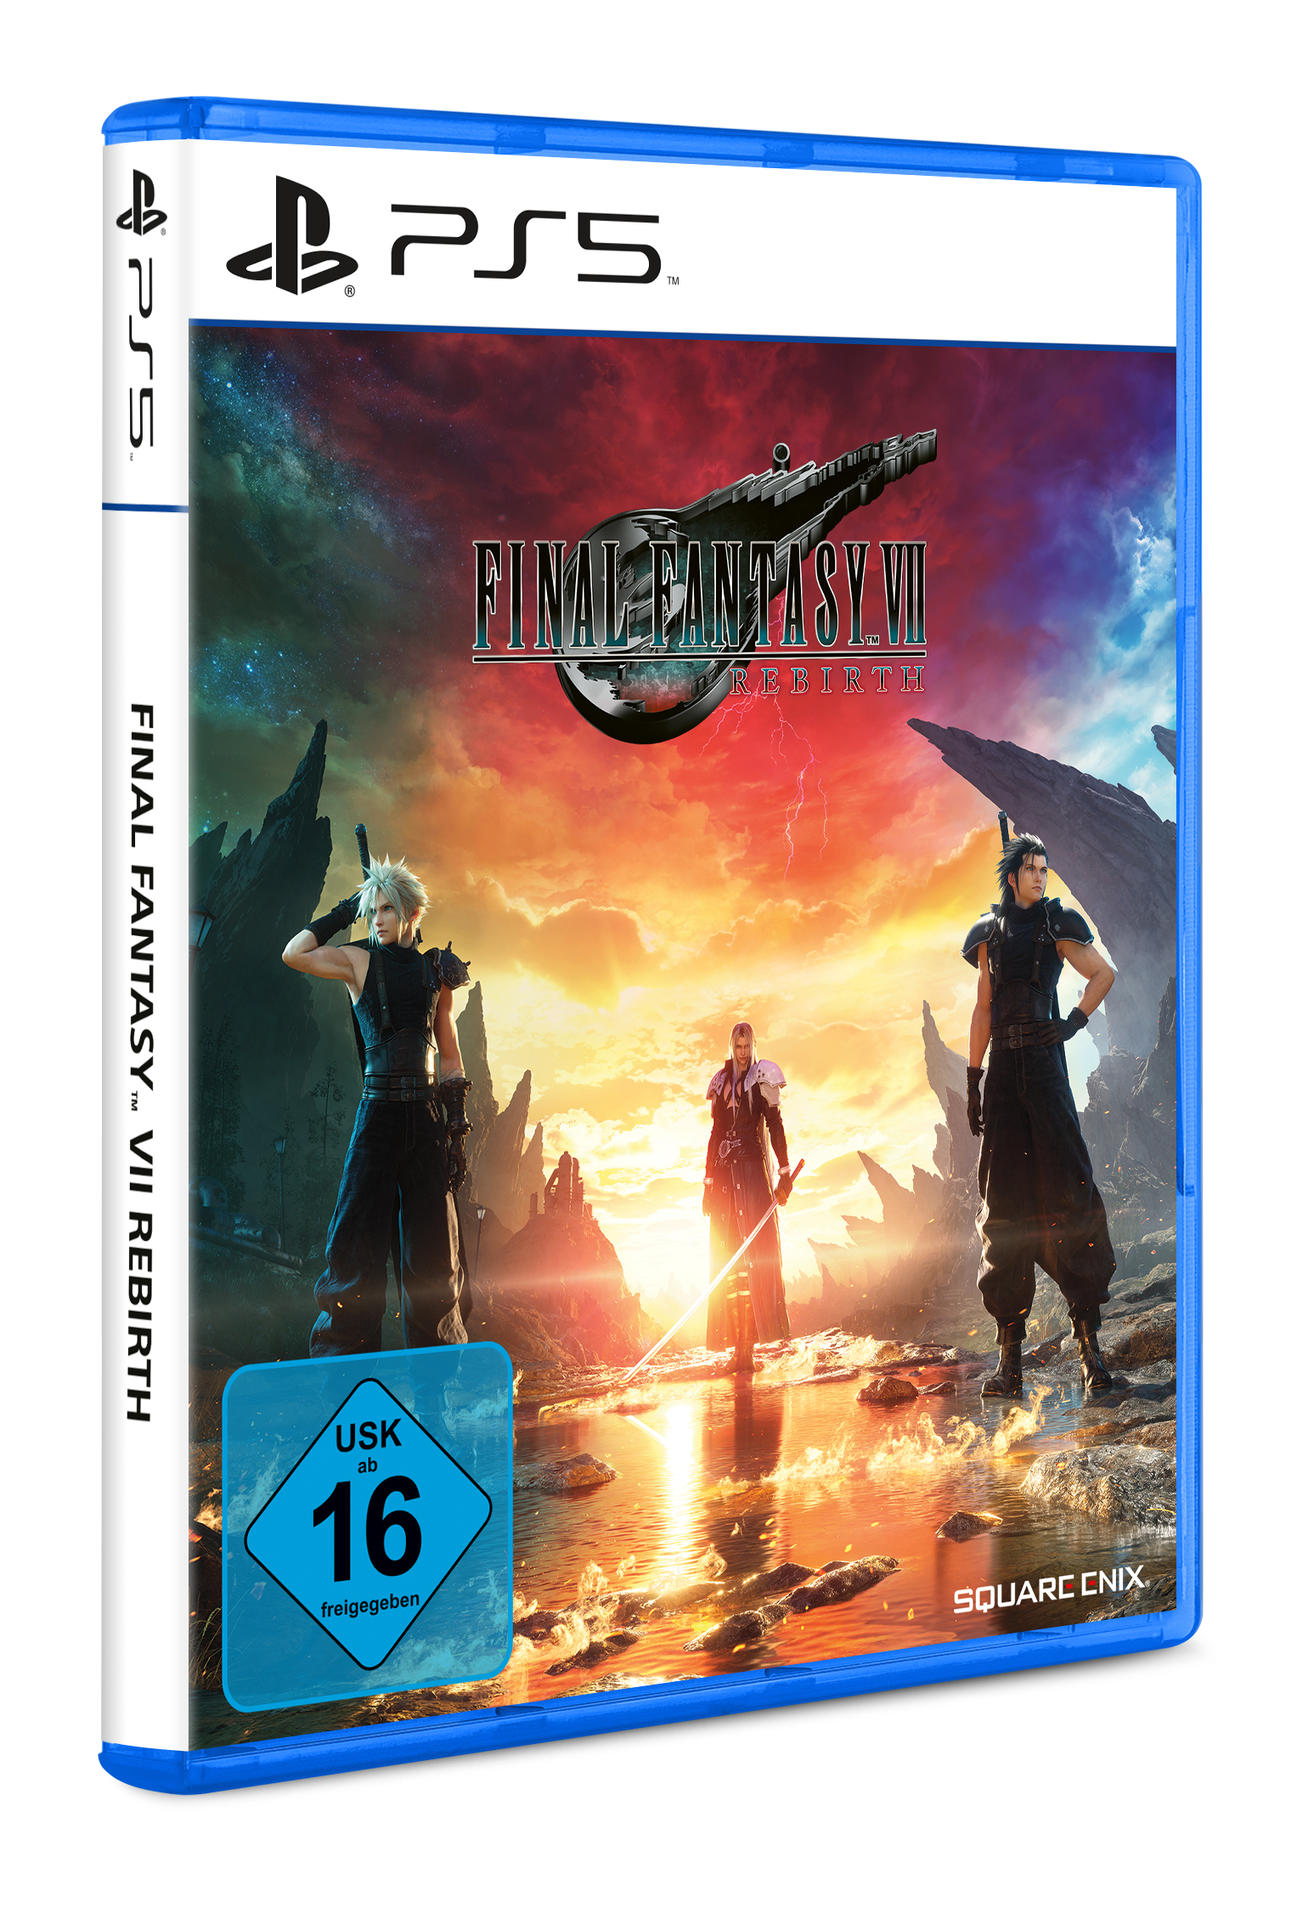 Fantasy VII Final - Rebirth 5] [PlayStation